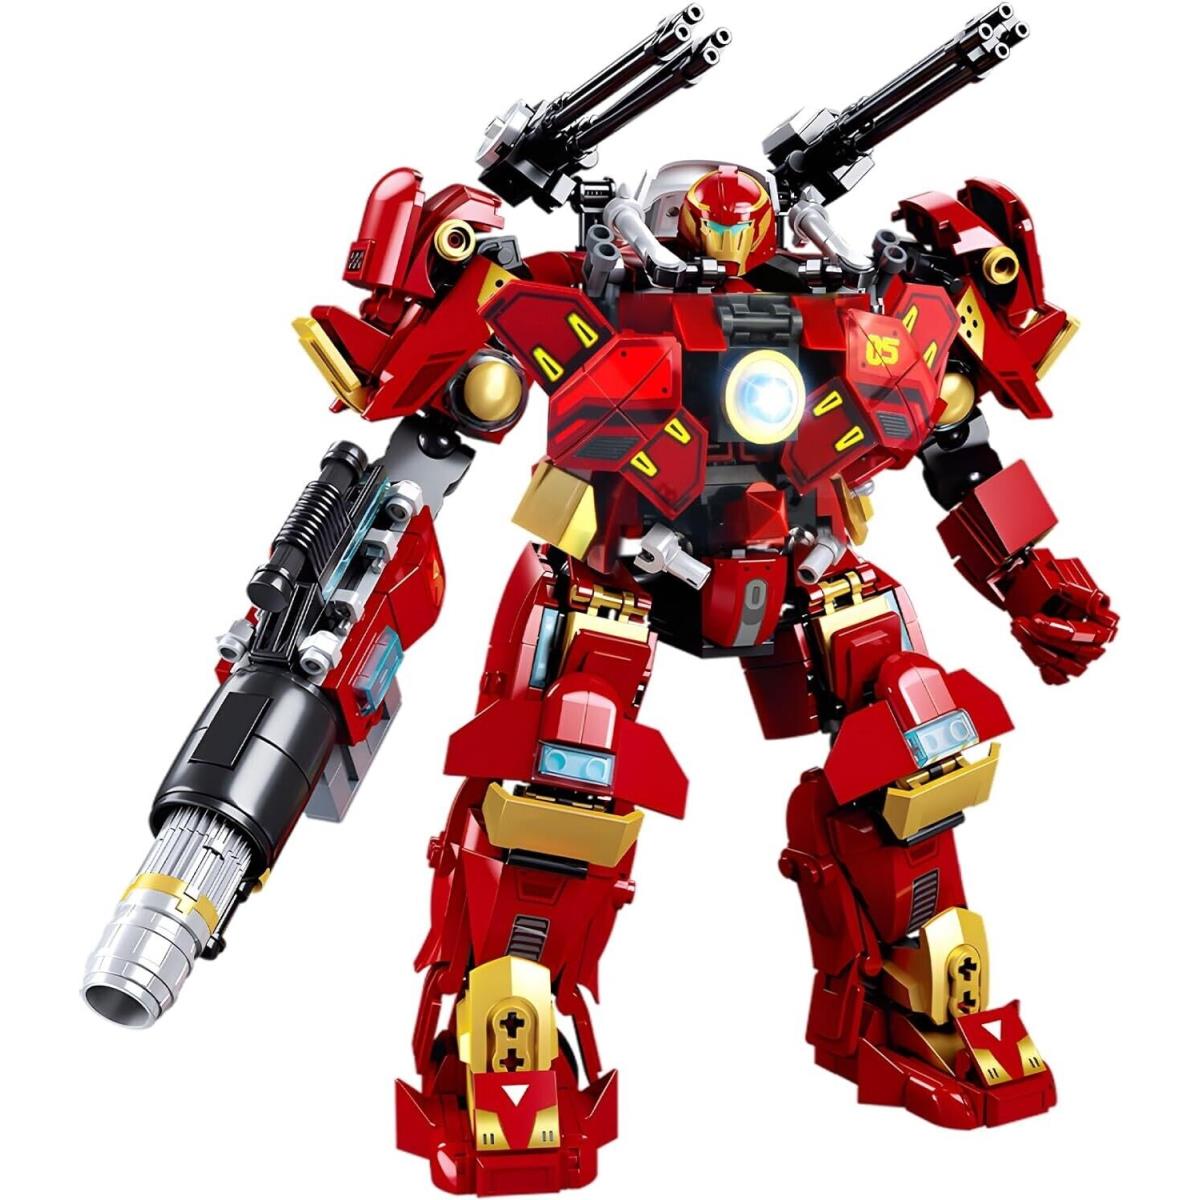 Lego Compatible Mech Robot Transforming Building Blocks Set Iron Man Theme 588PC